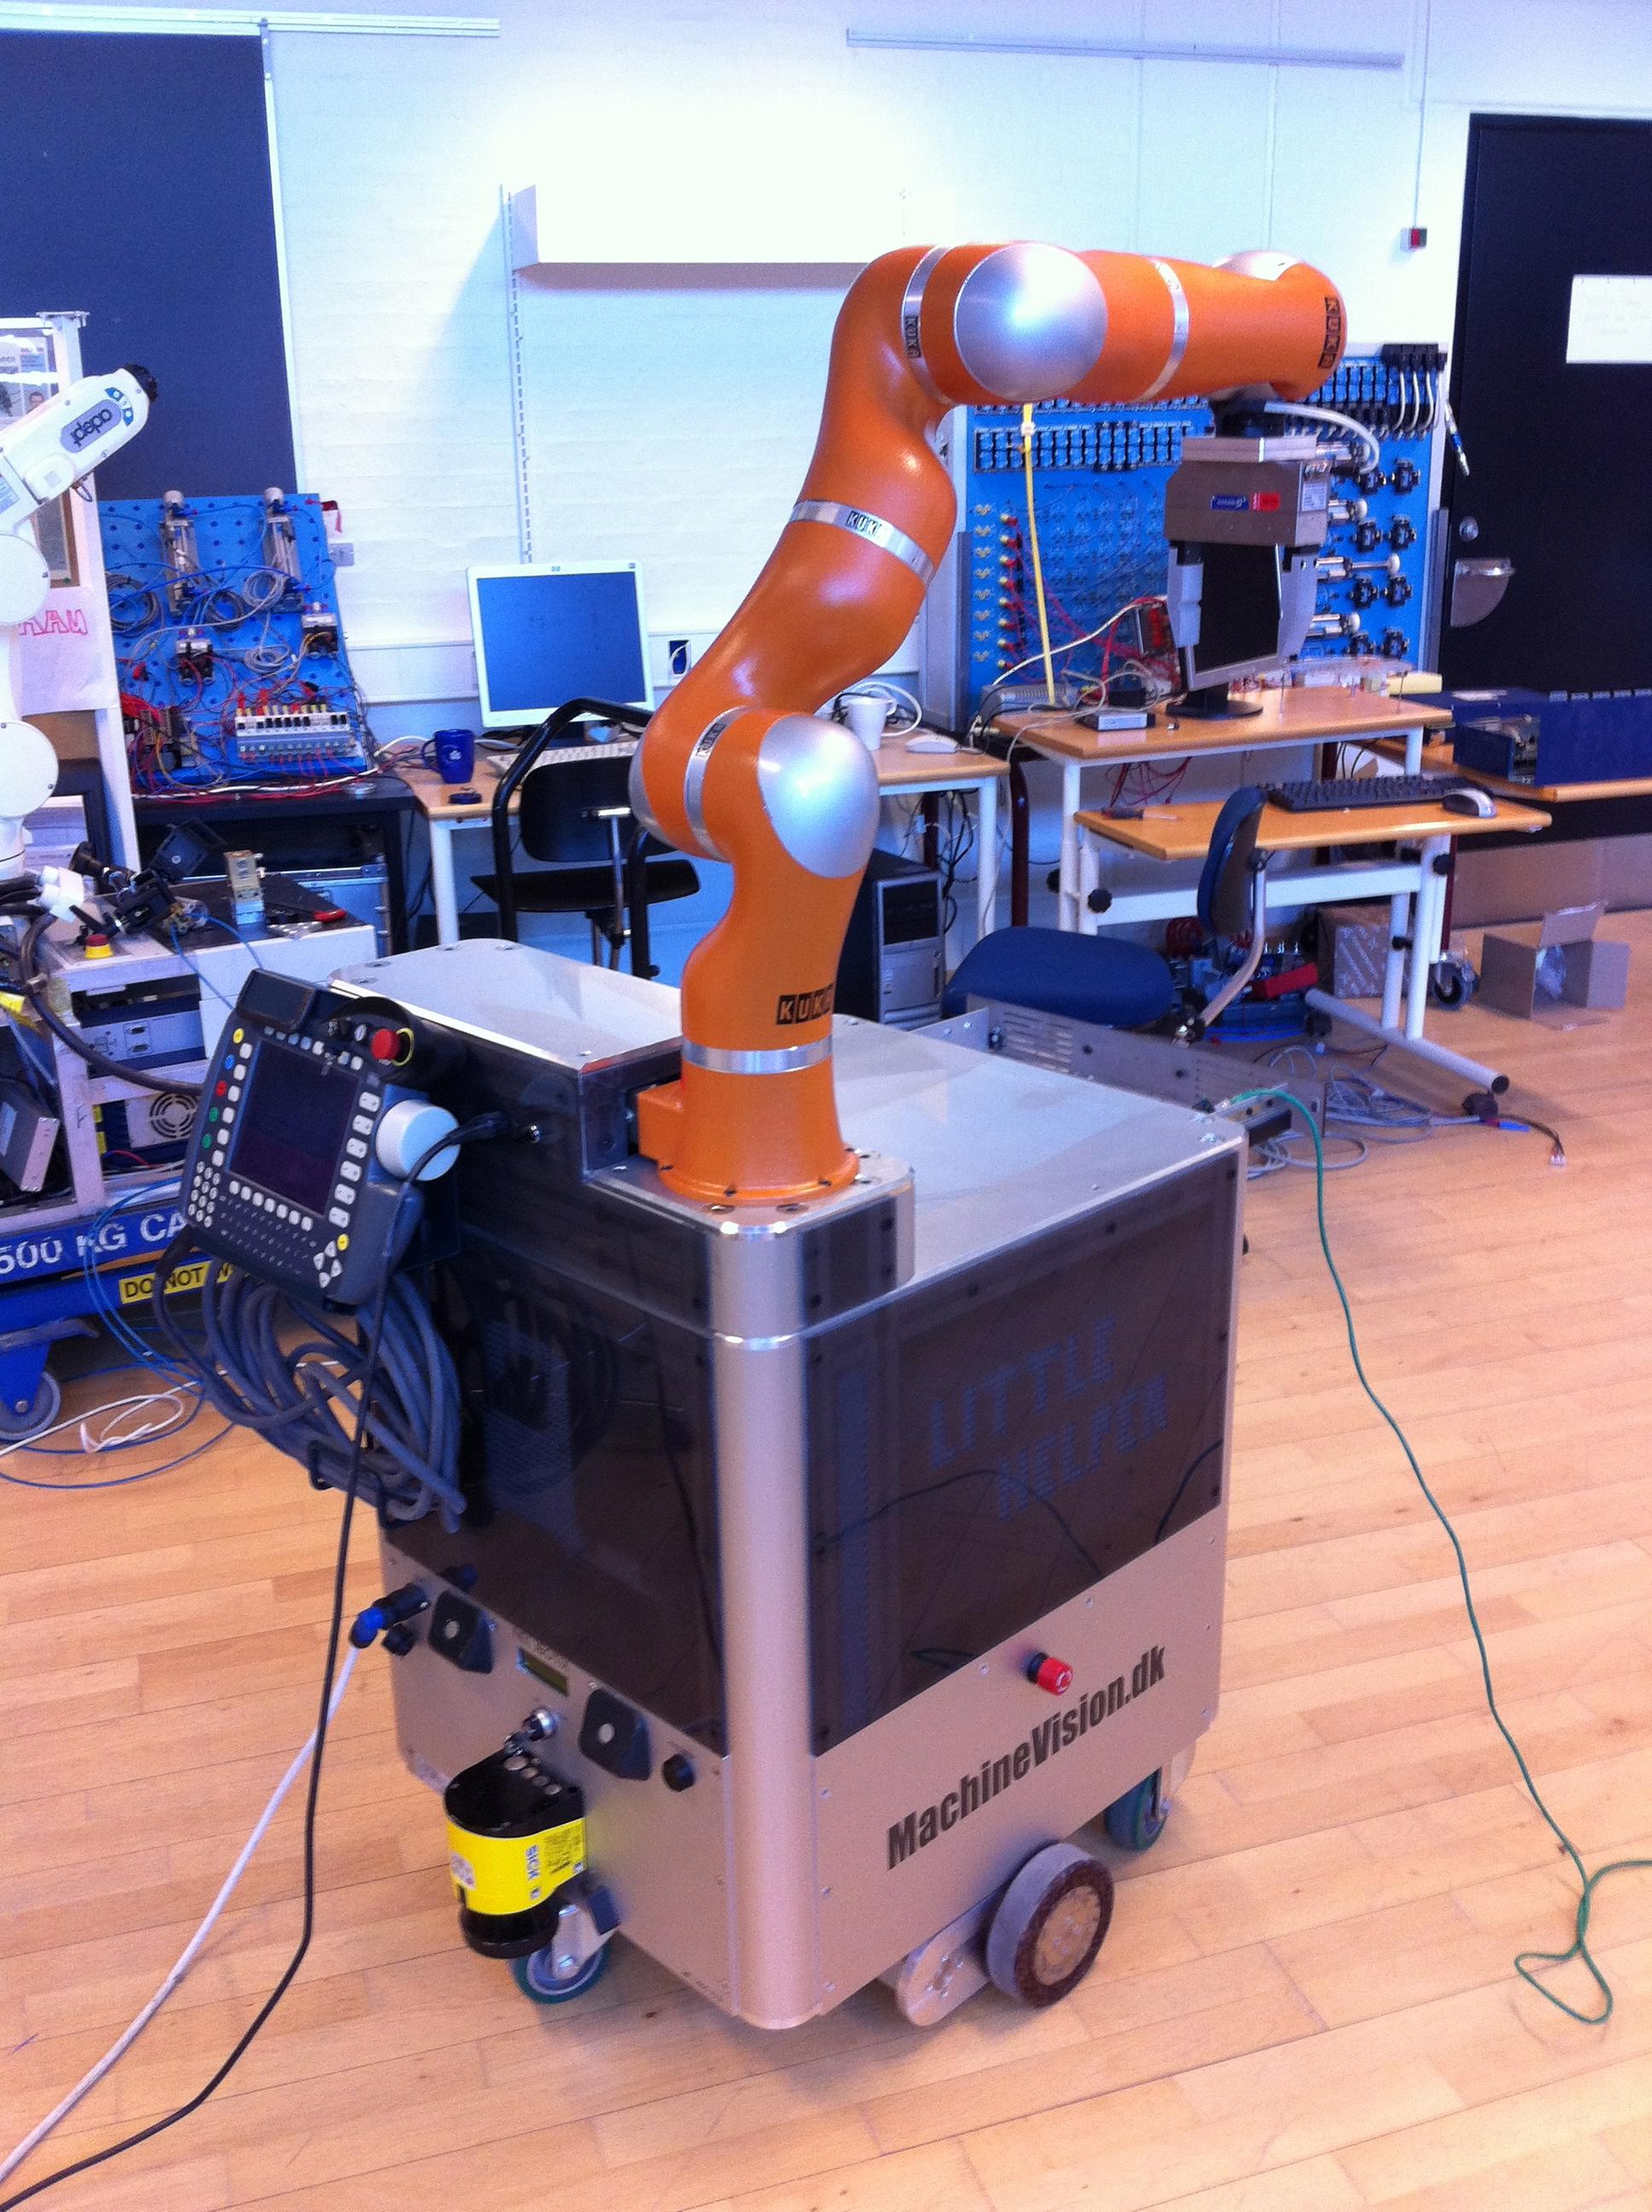 Robots using ROS: Aalborg University's 